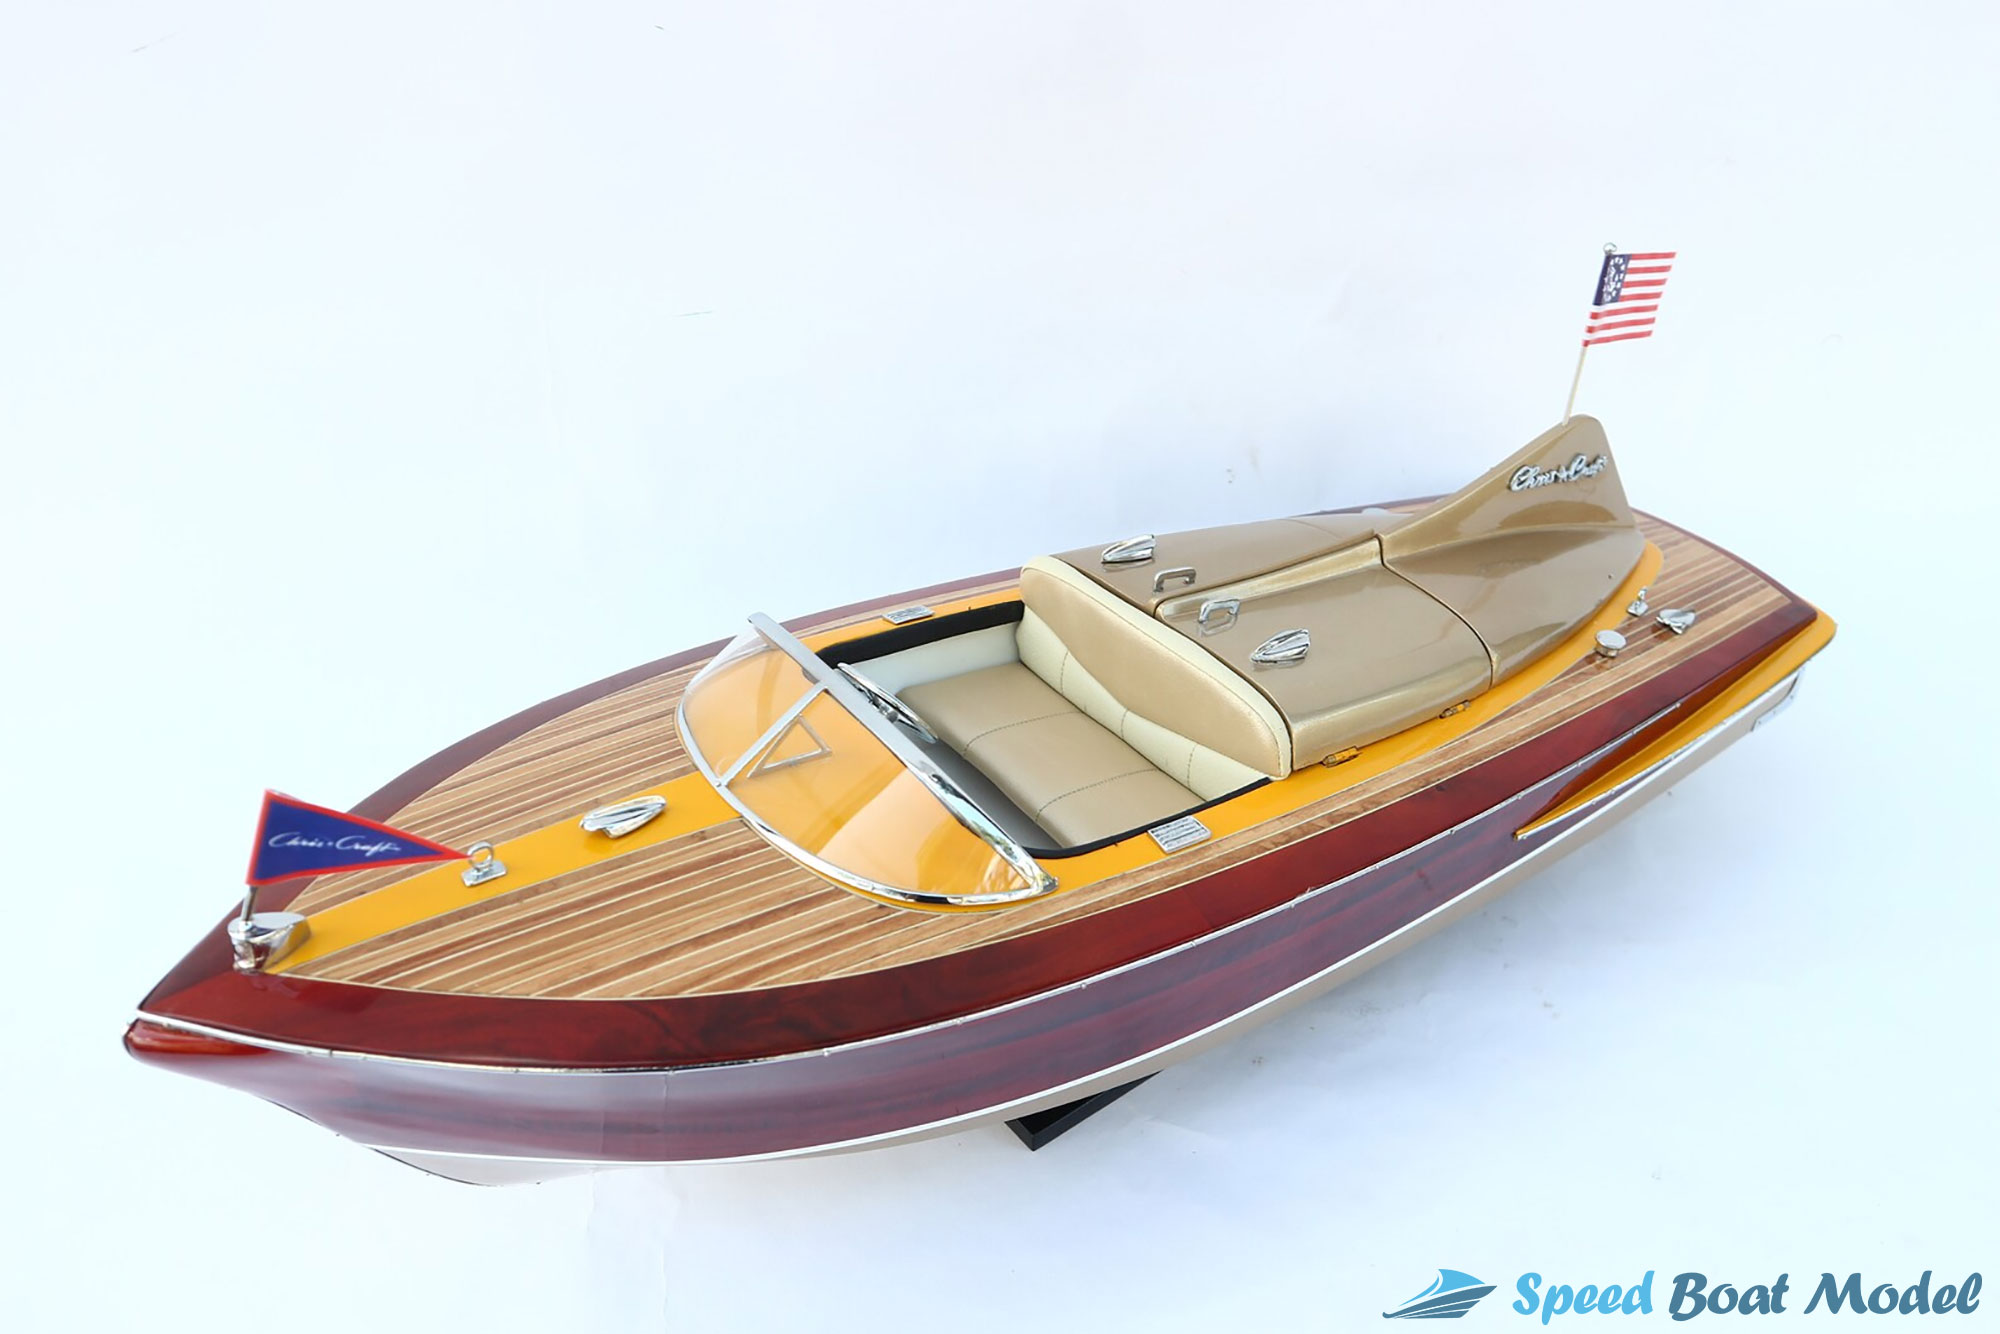 Chris Craft Cobra 1955 Classic Speed Boat Model 27.5"